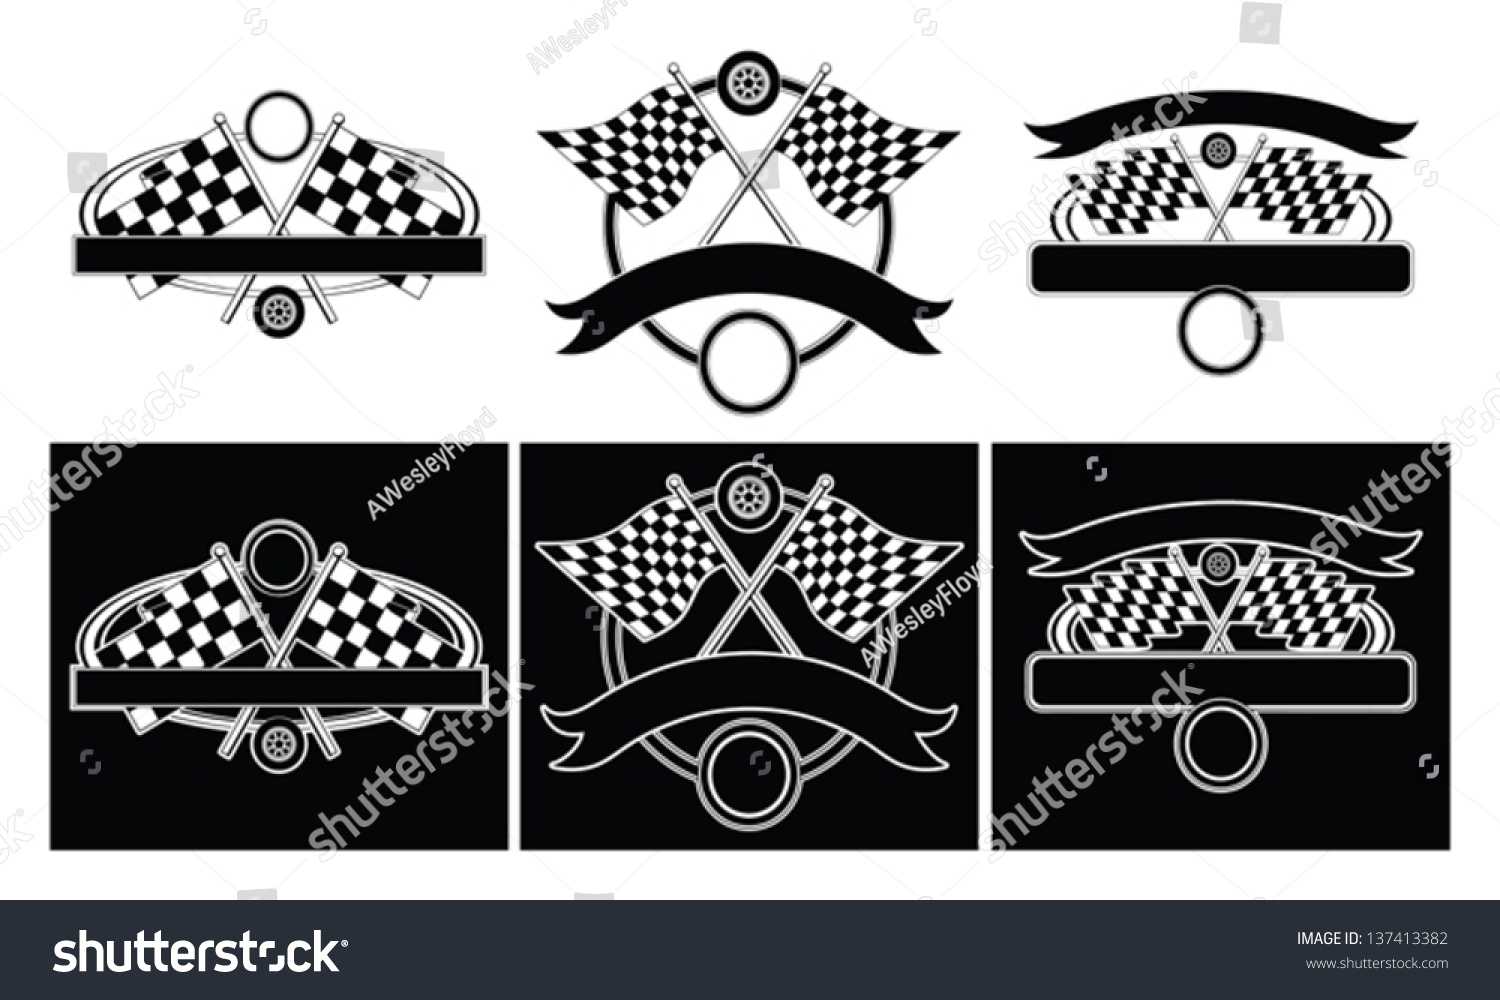 Racing Design Templates Illustration Designs Car Stock In Blank Race Car Templates